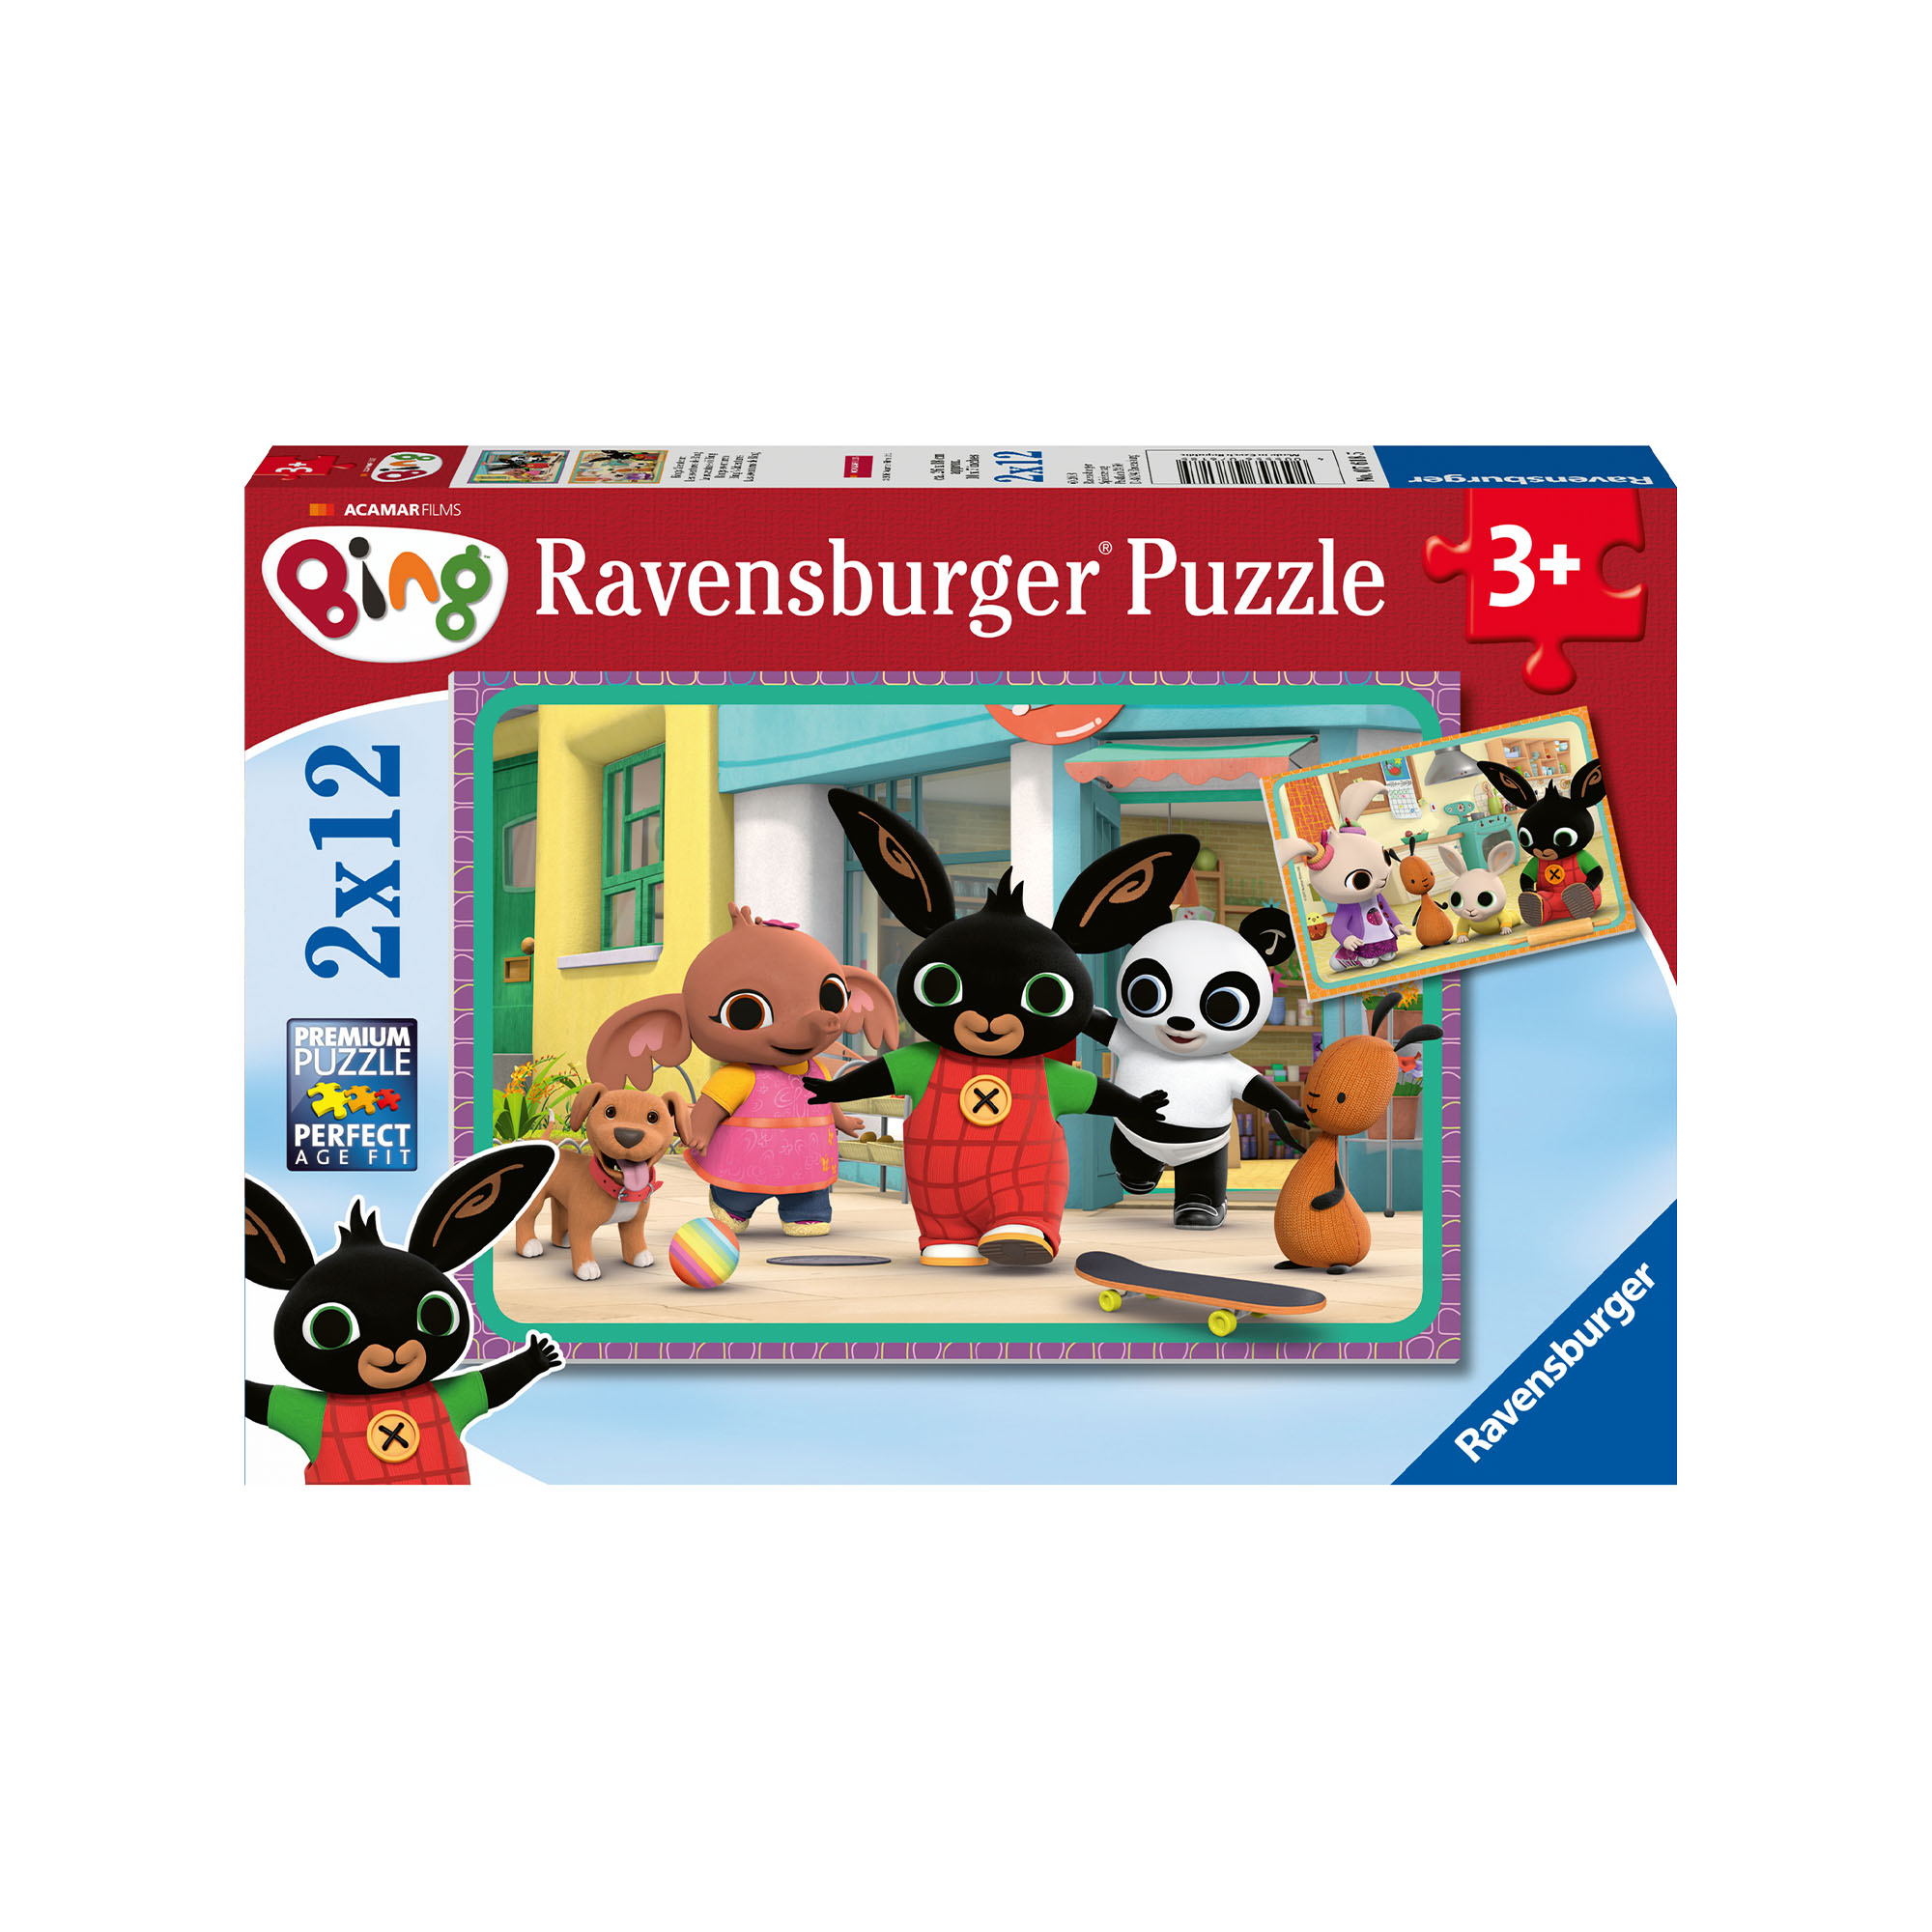 Ravensburger Puzzle 2x12 pezzi 07618 - Bing, , large